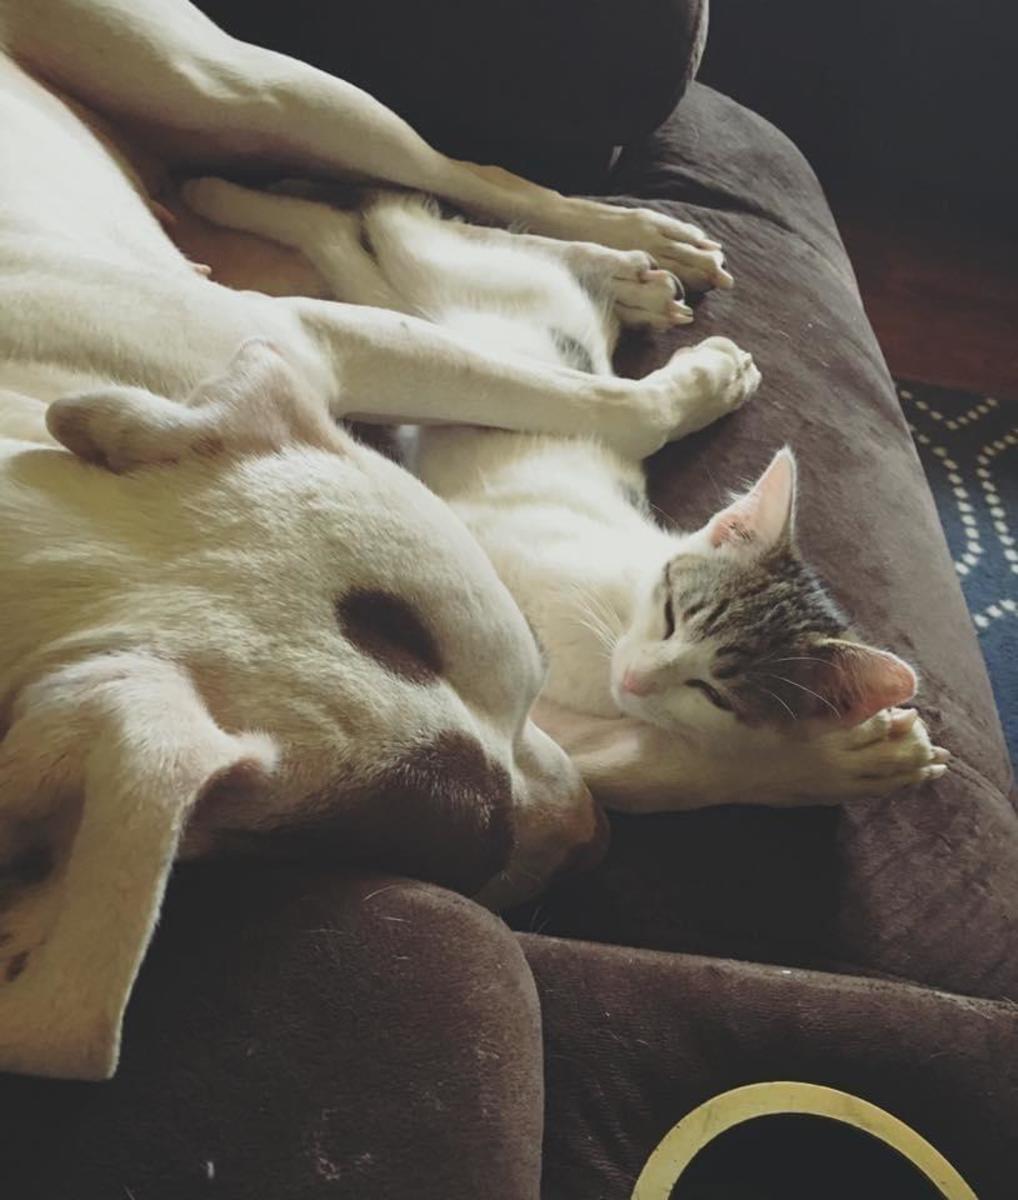 Reba and feline friend Sasha take a cat-nap.